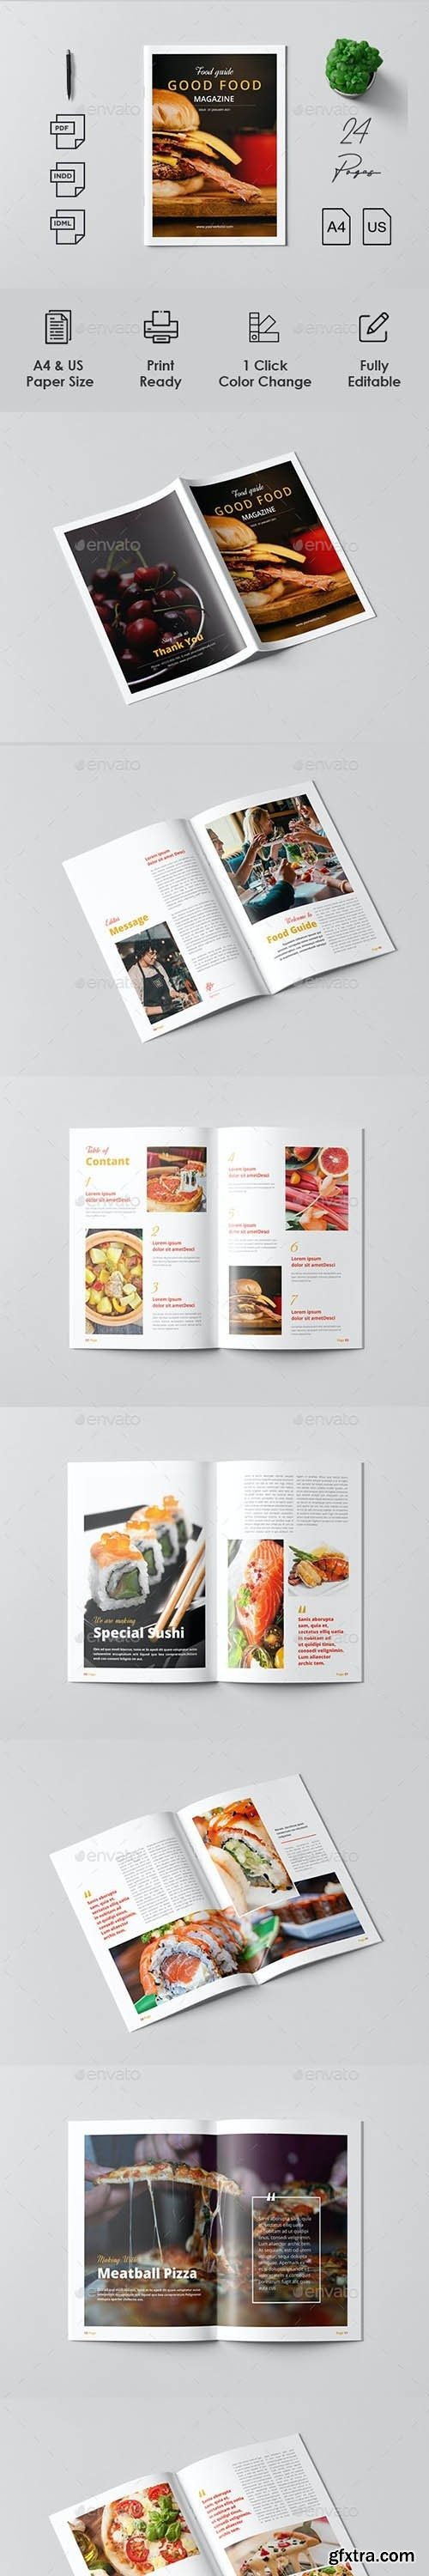 GraphicRiver - Food Magazine 27555969